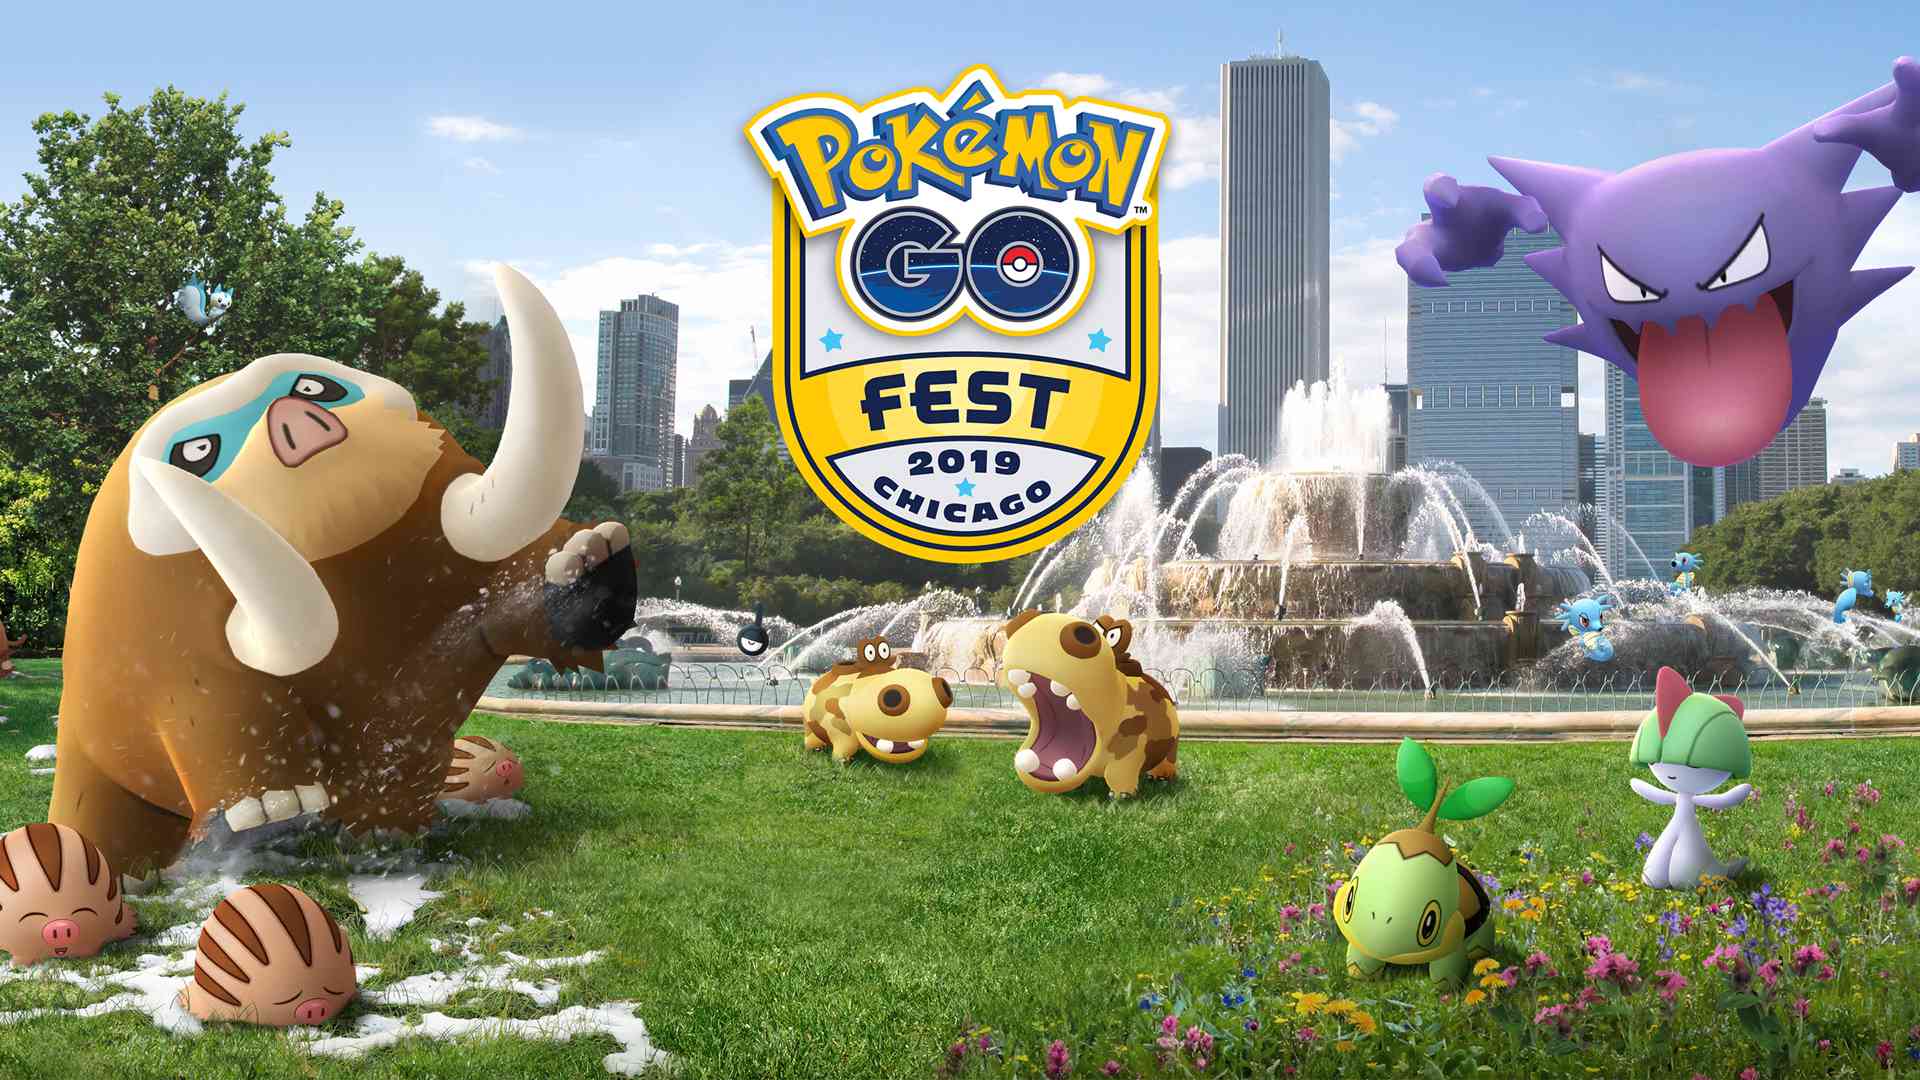 Banner pro Pokemon Go Fest Chivago 2019.